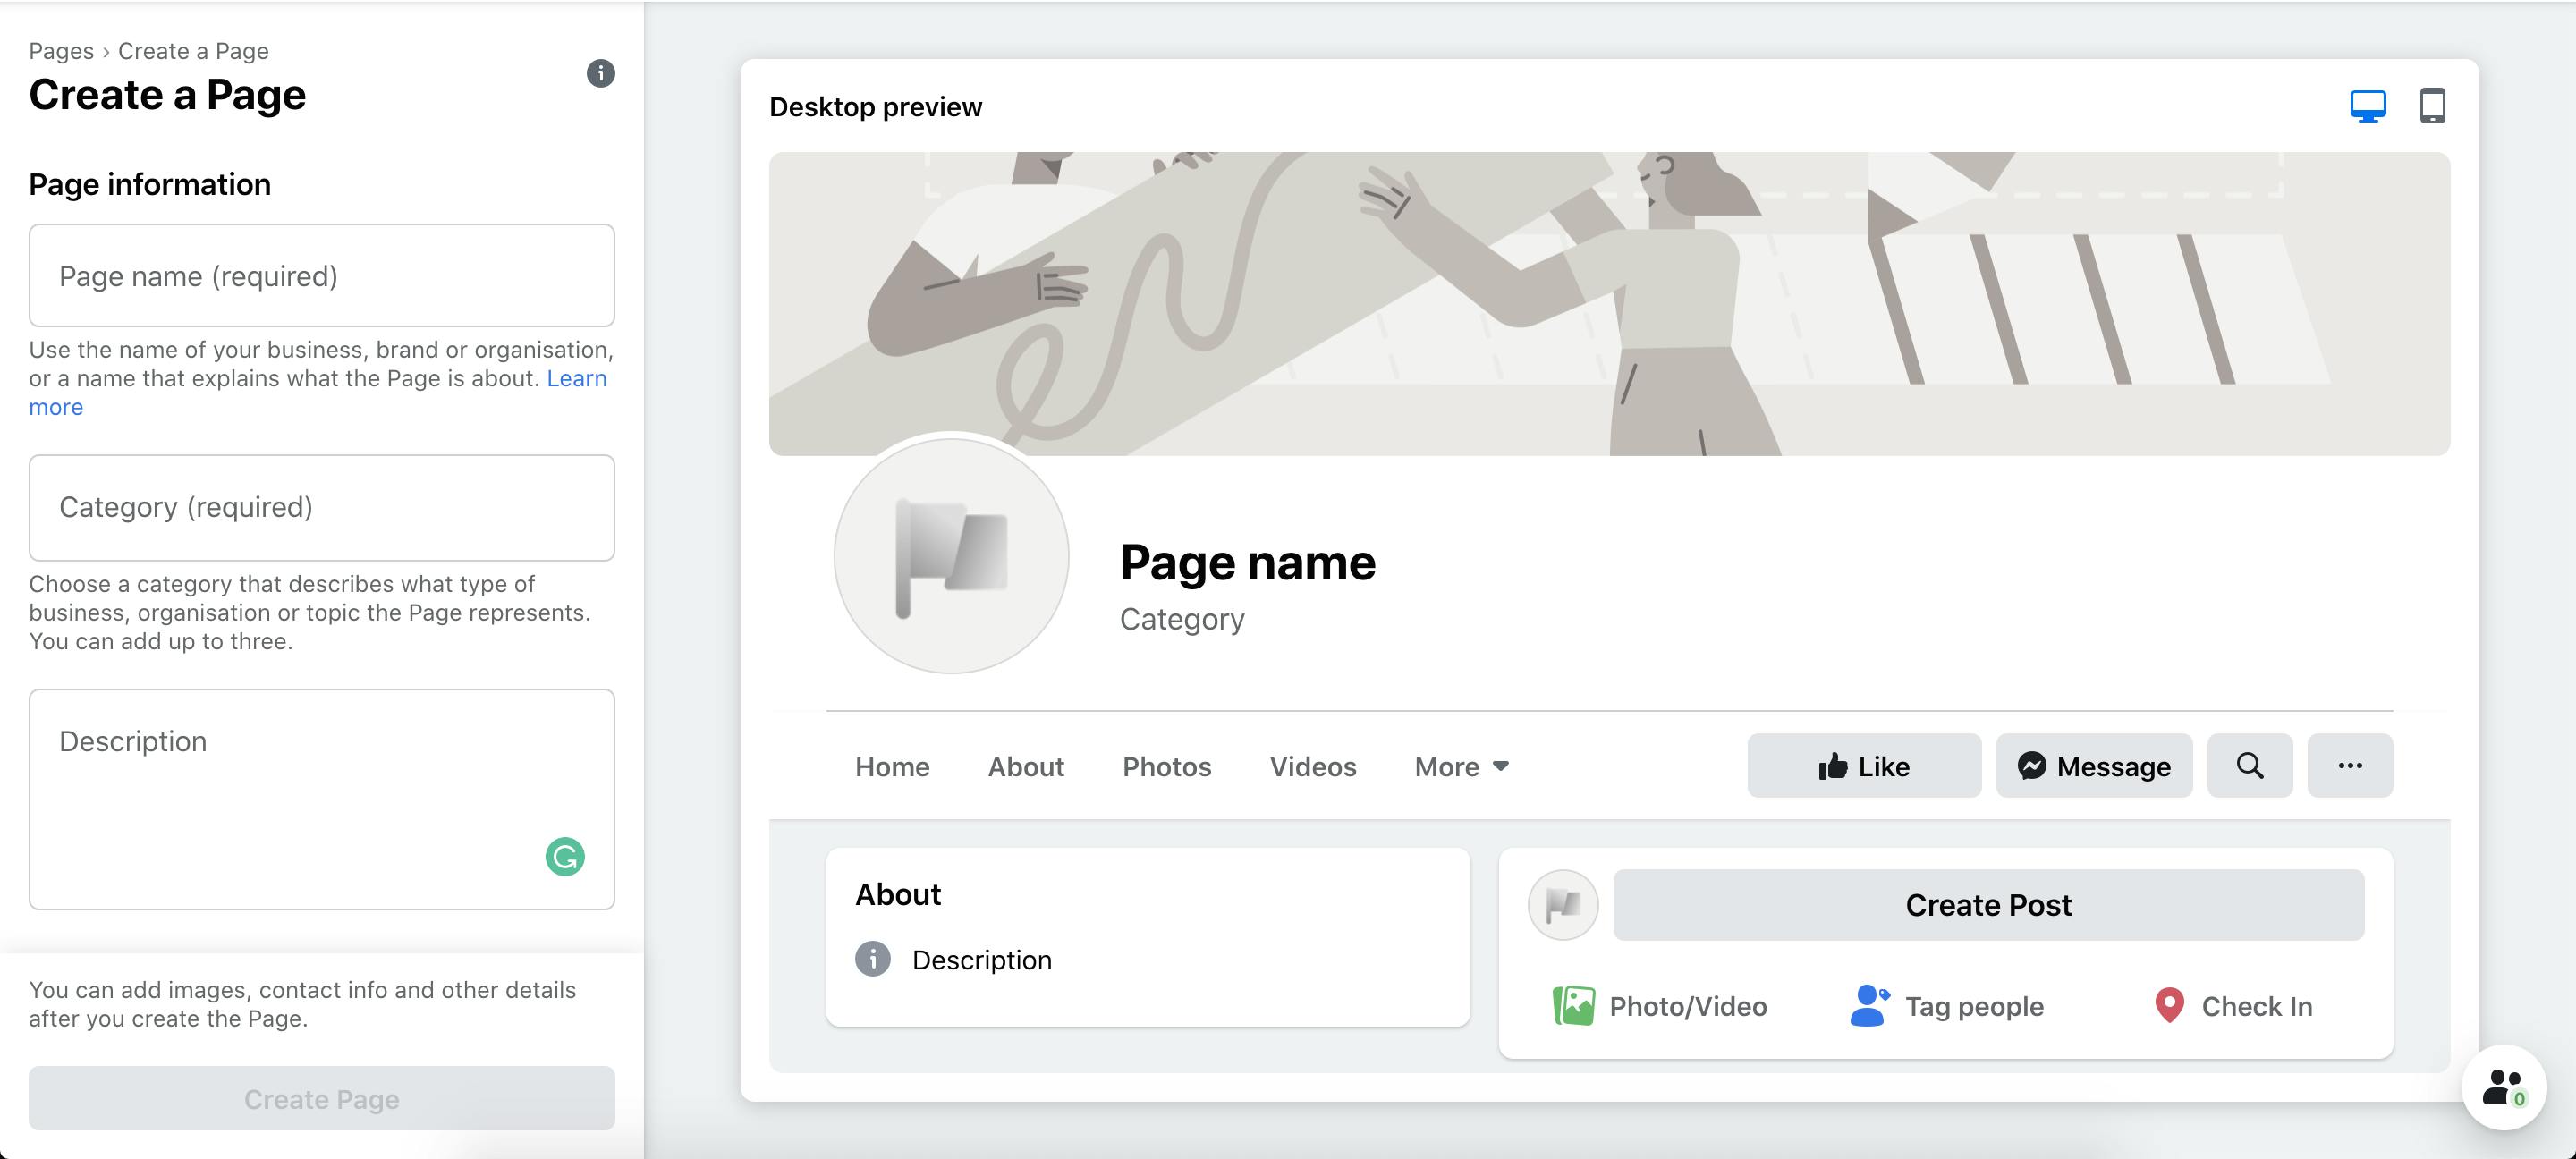 Create a Facebook page